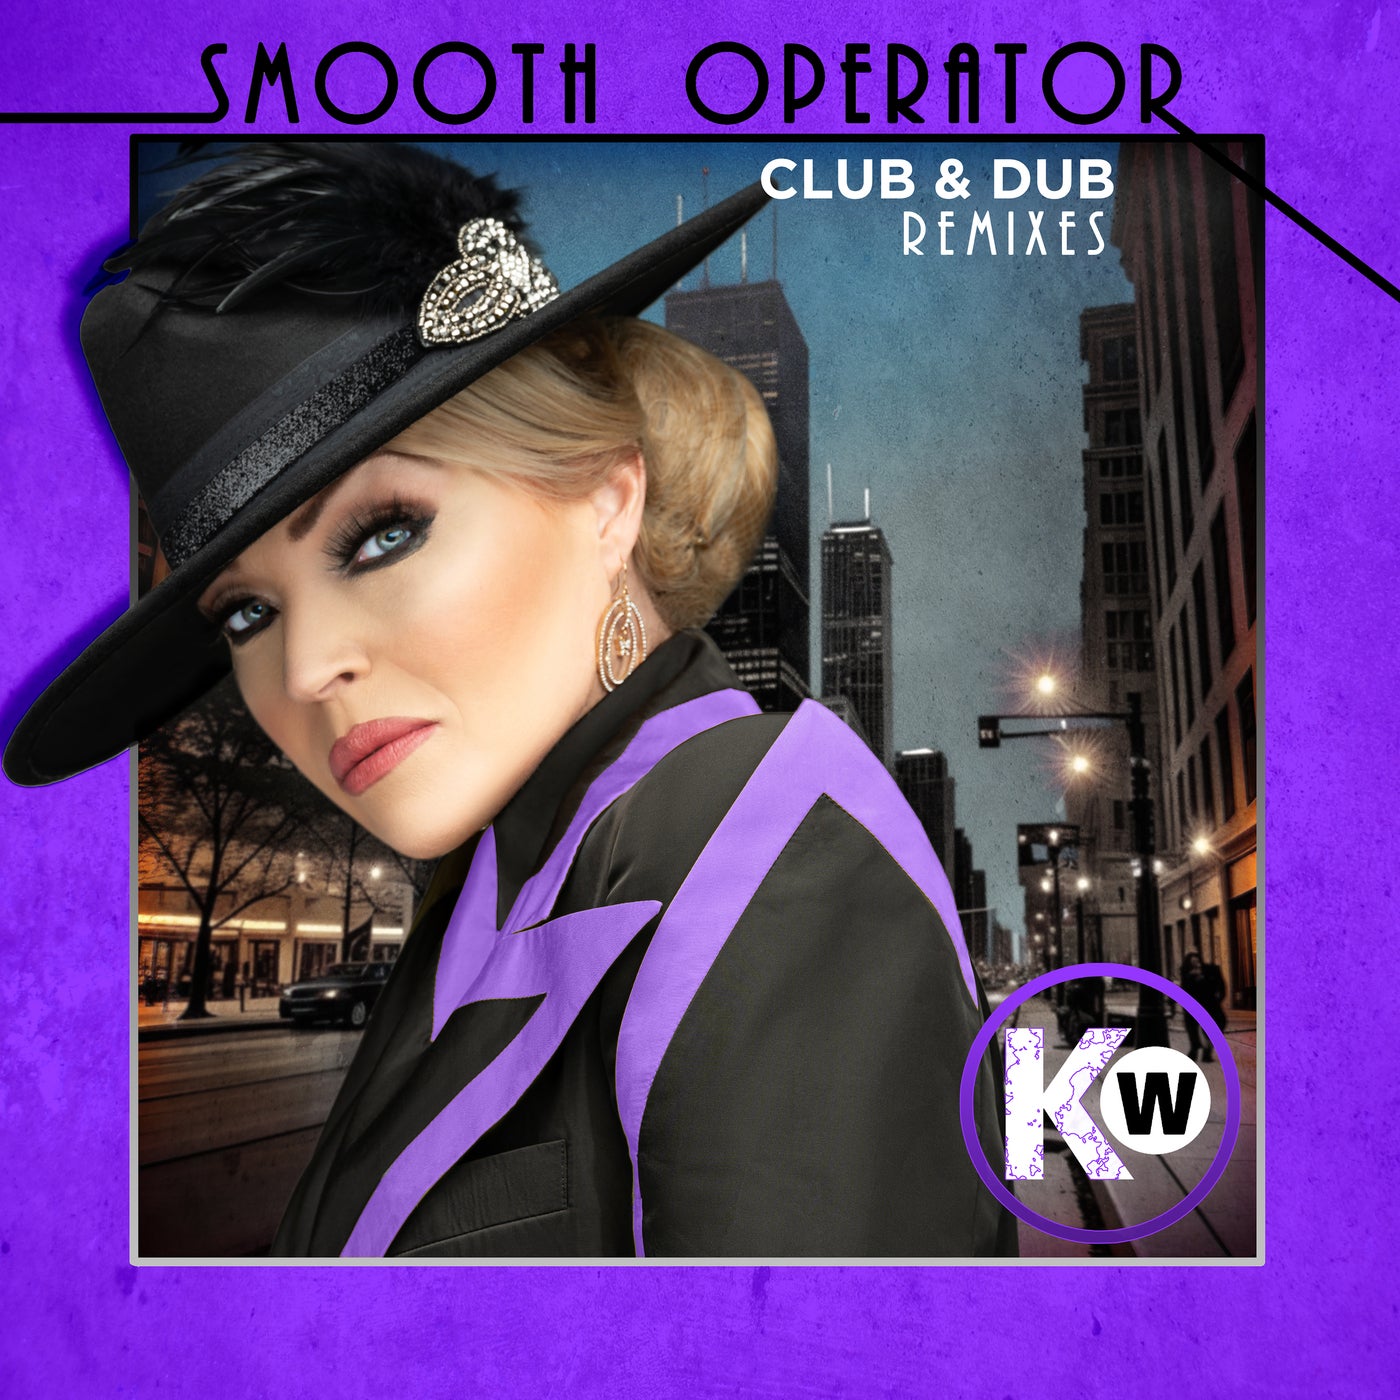 Smooth Operator (Club & Dub Remixes)